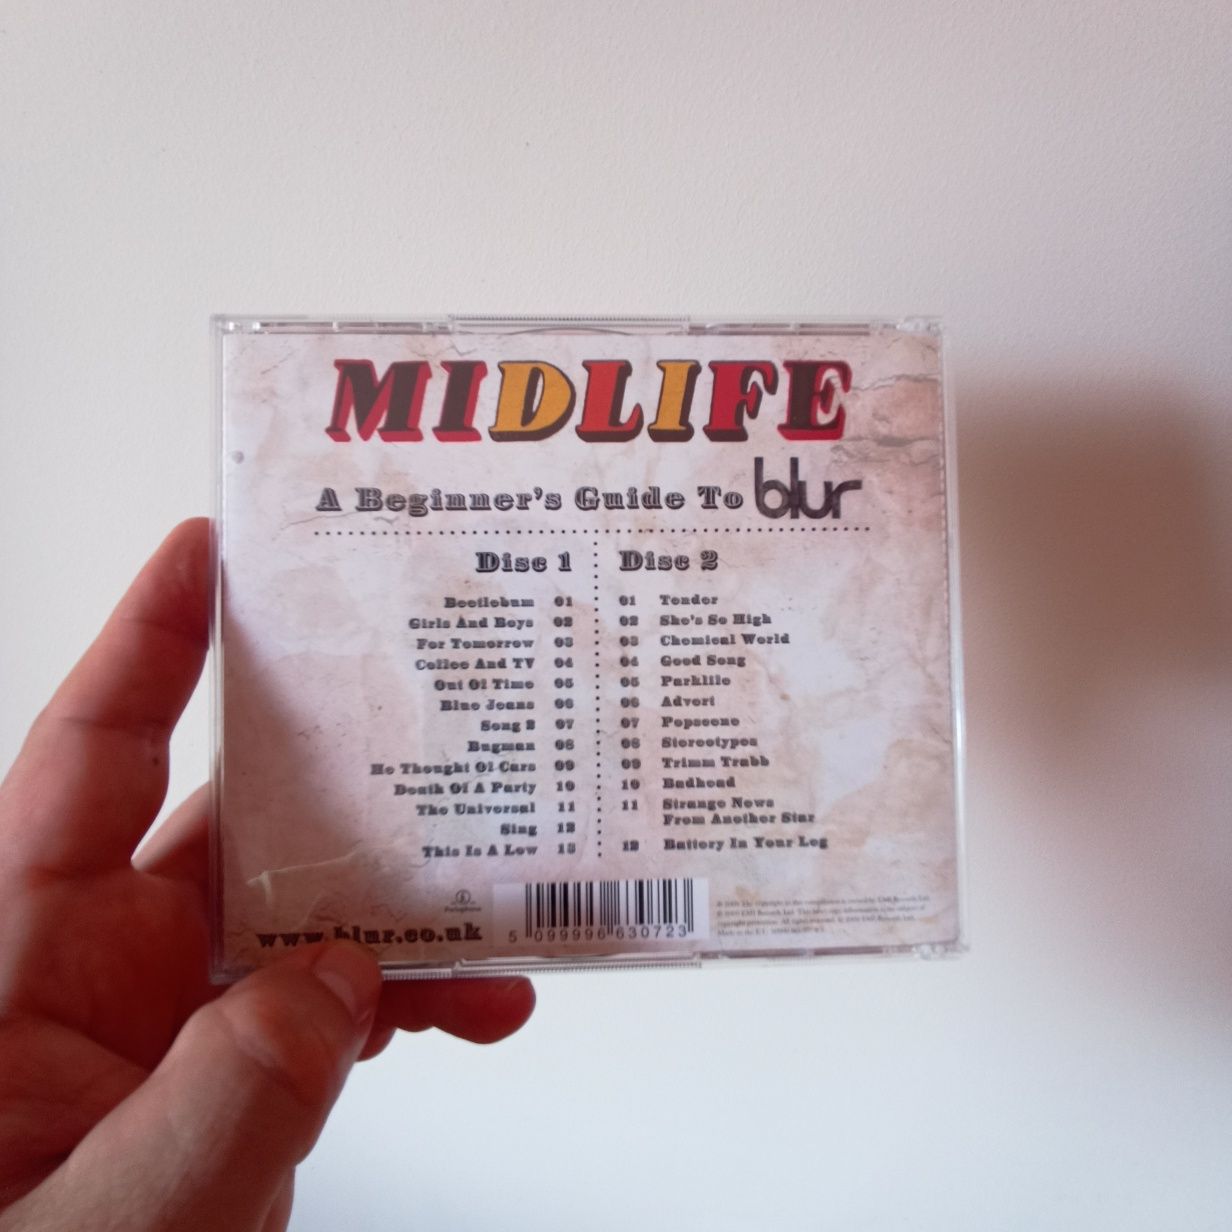 Blur - Midlife duplo CD